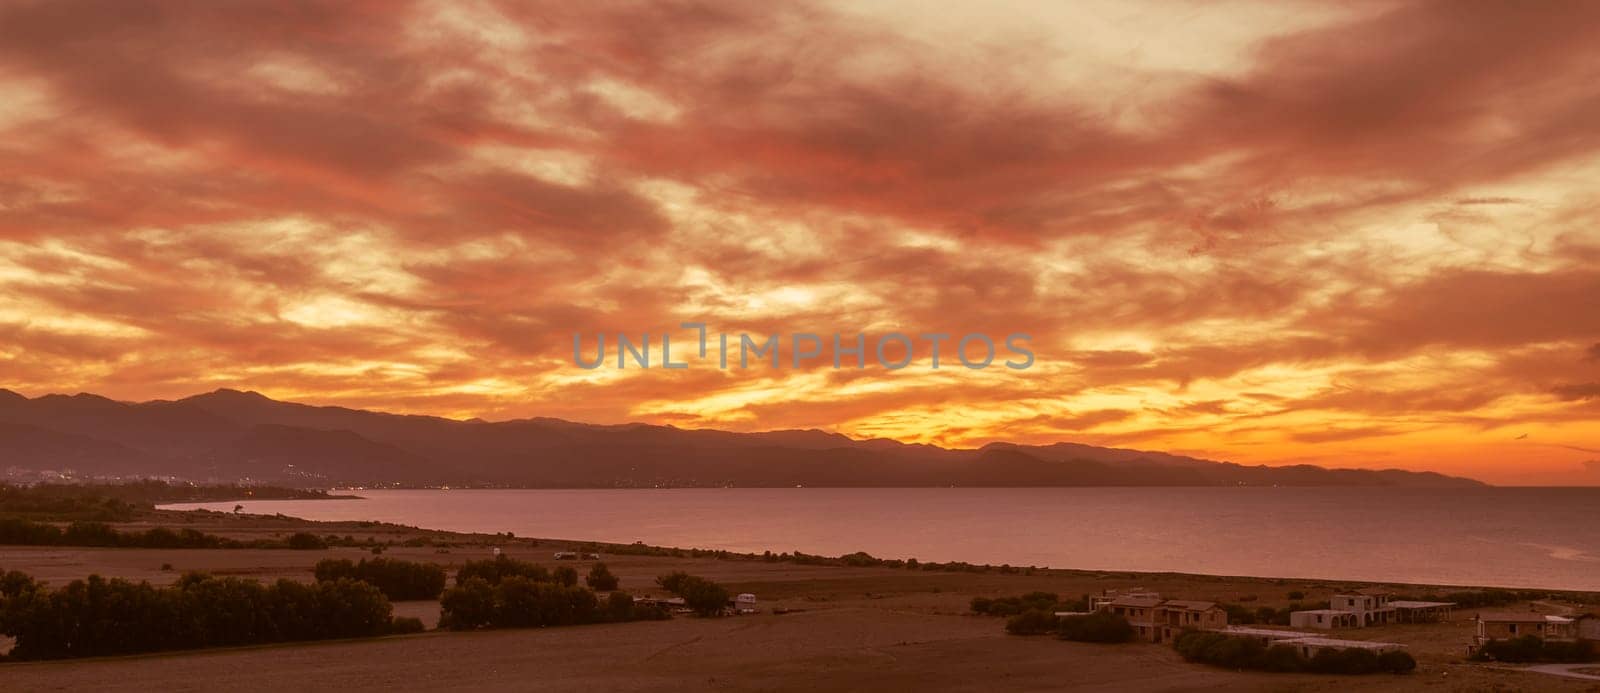 autumn sunset on the Mediterranean coast on the island of Cyprus 2 by Mixa74